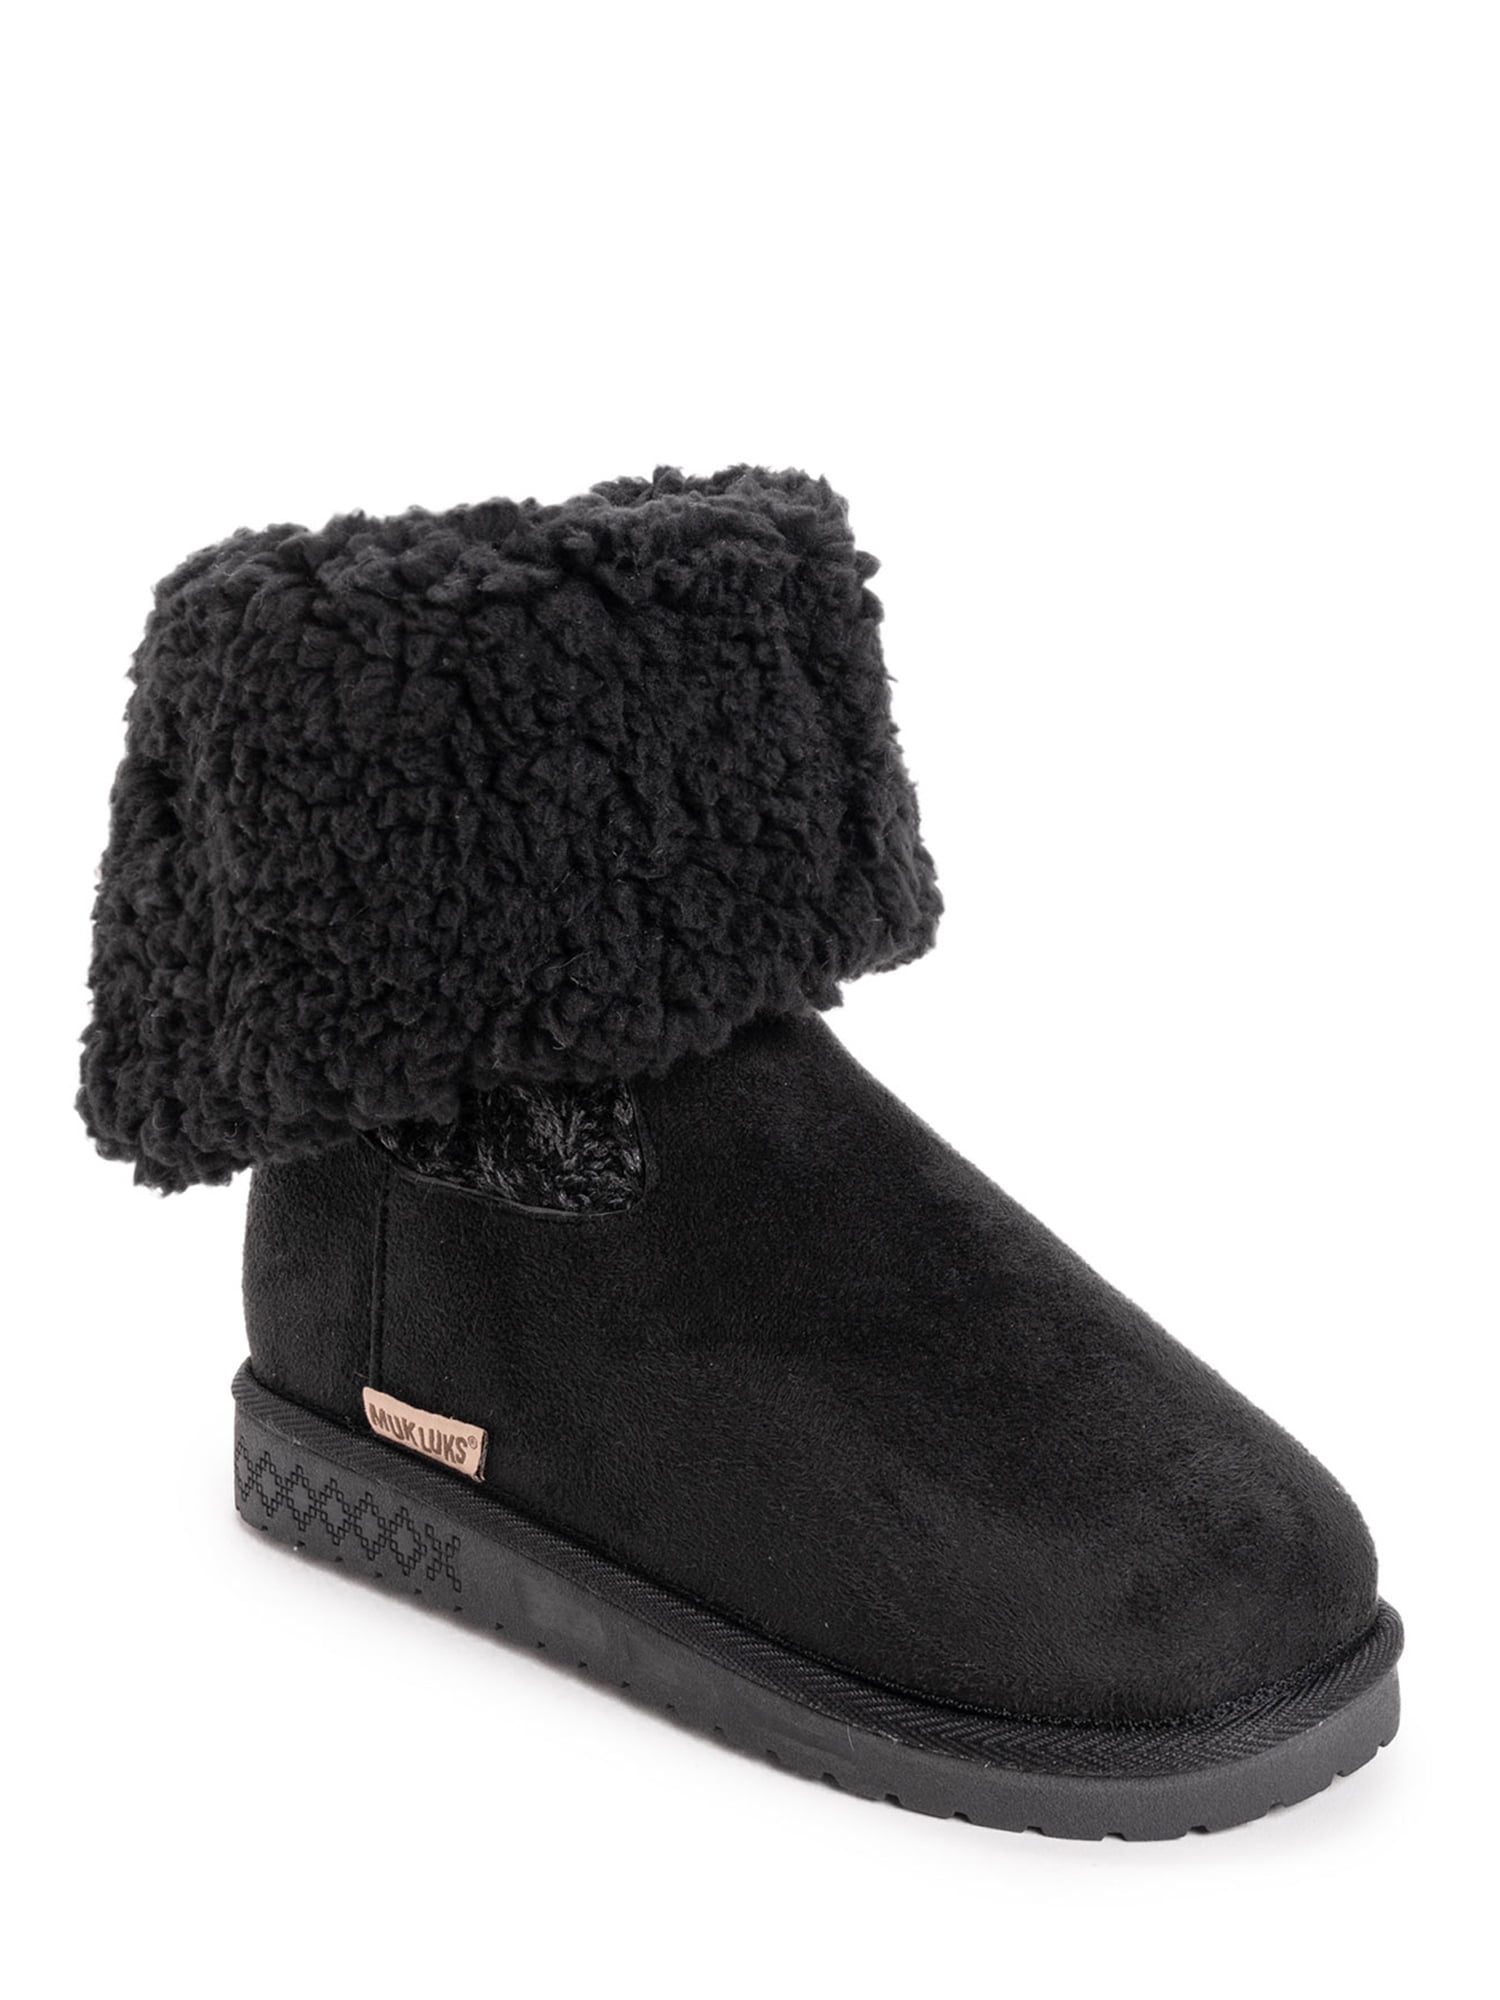 Buy > muk luks faux fur boots > in stock